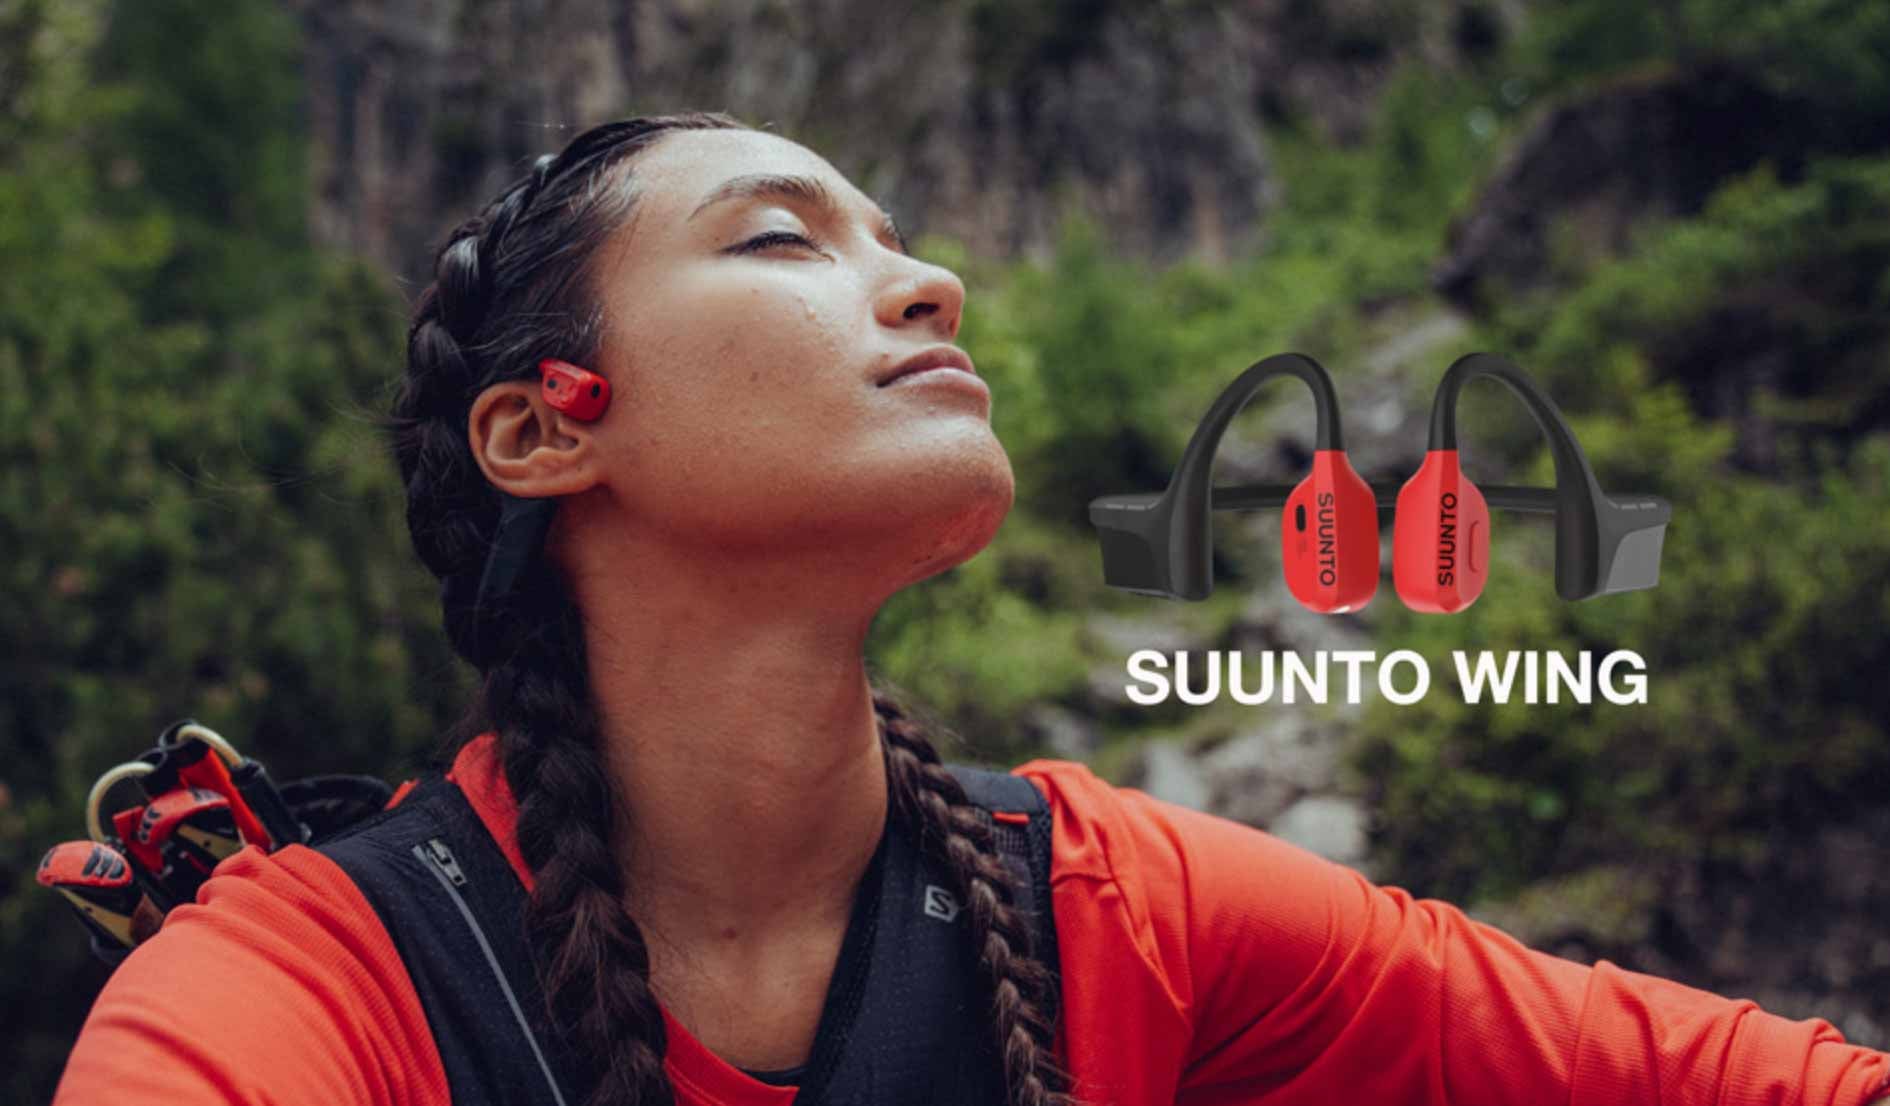 Suunto Race Watch & Suunto Wing Headphones Highlight New Products